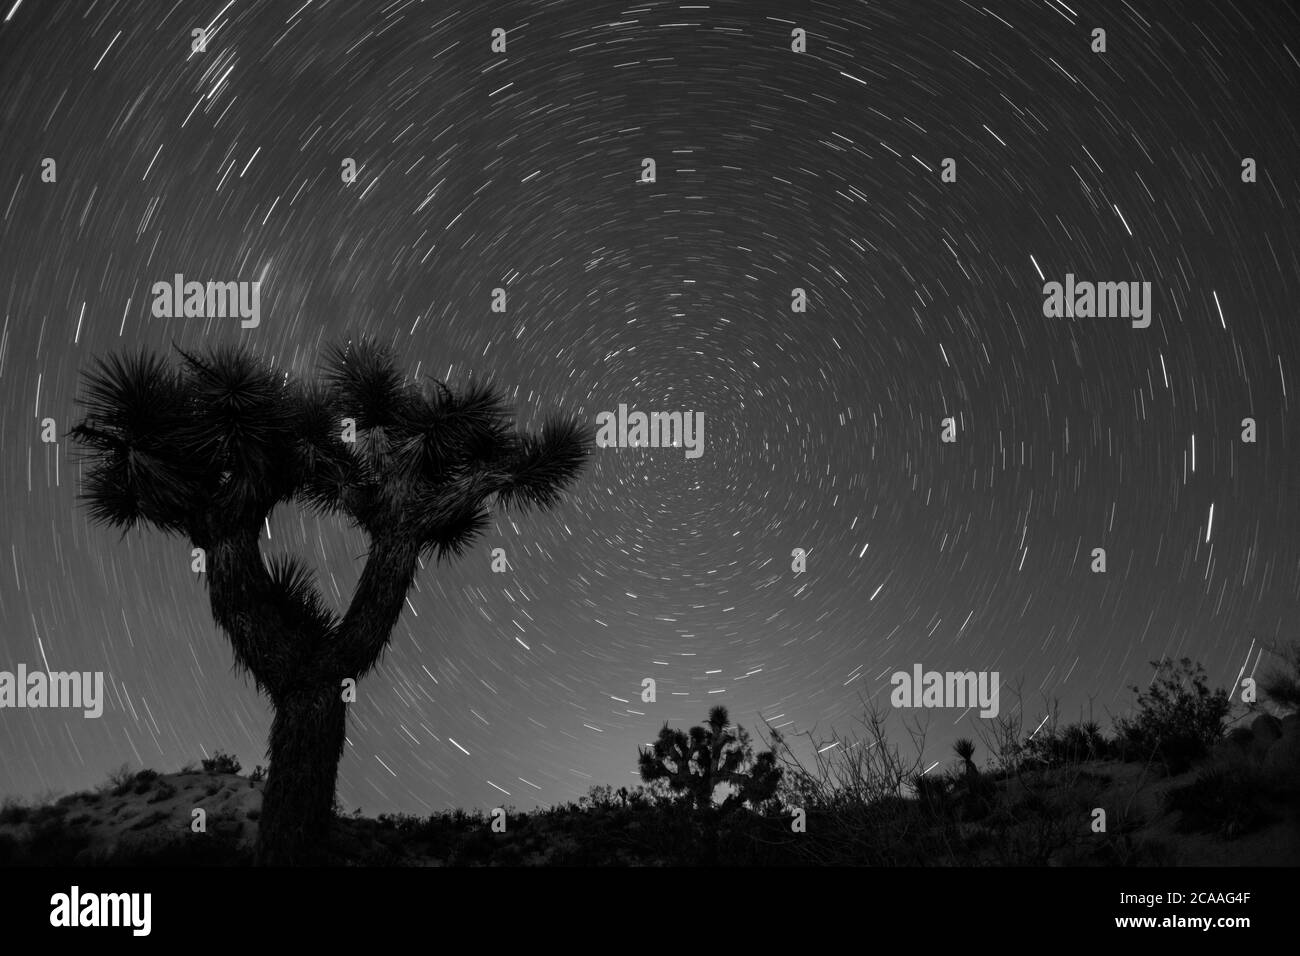 Joshua Tree with star trails in California's Mojave desert. Stock Photo